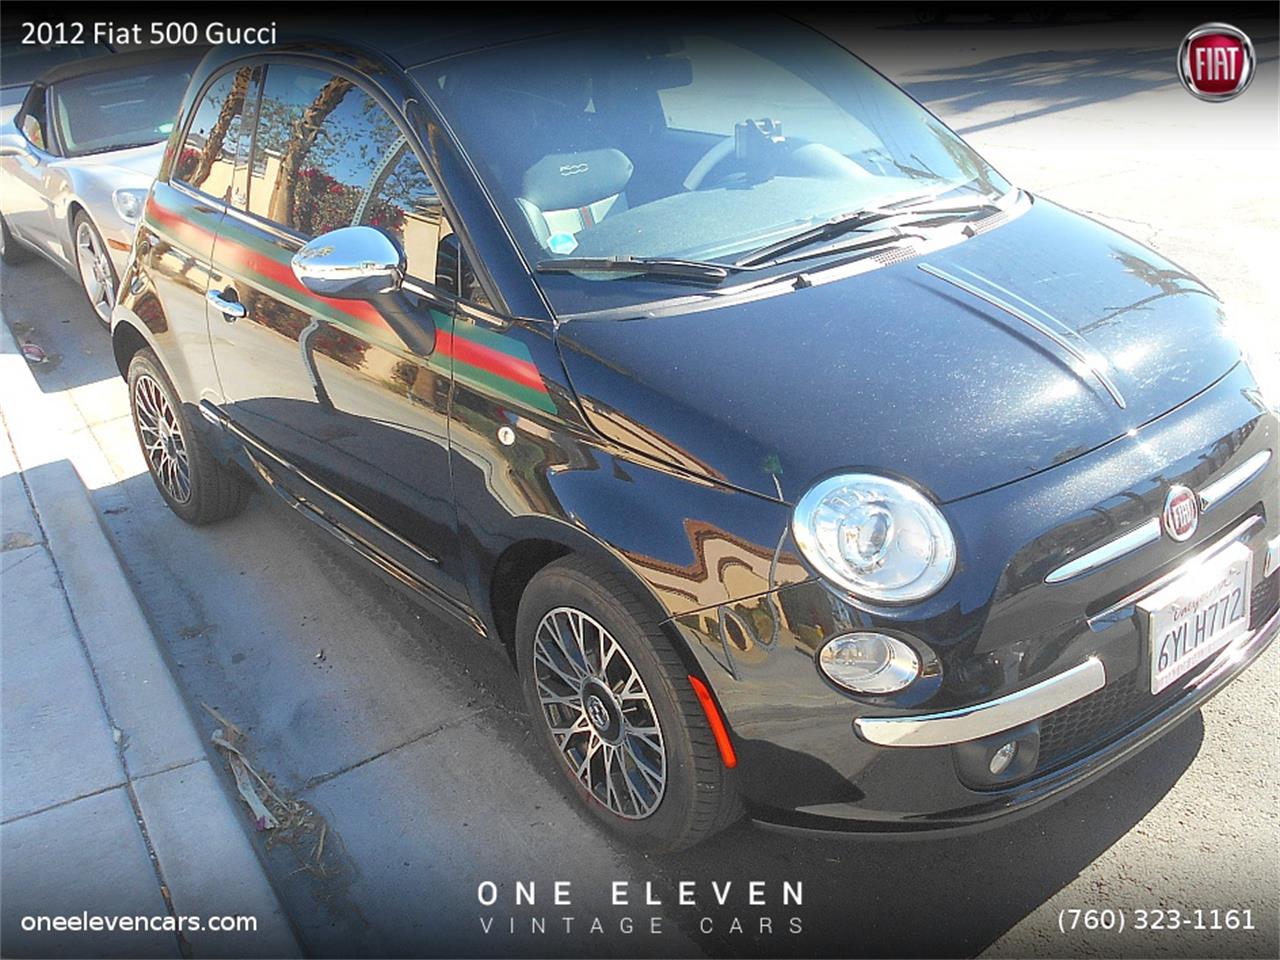 Gucci Fiat 500 Car Find - Denver Car Shipping